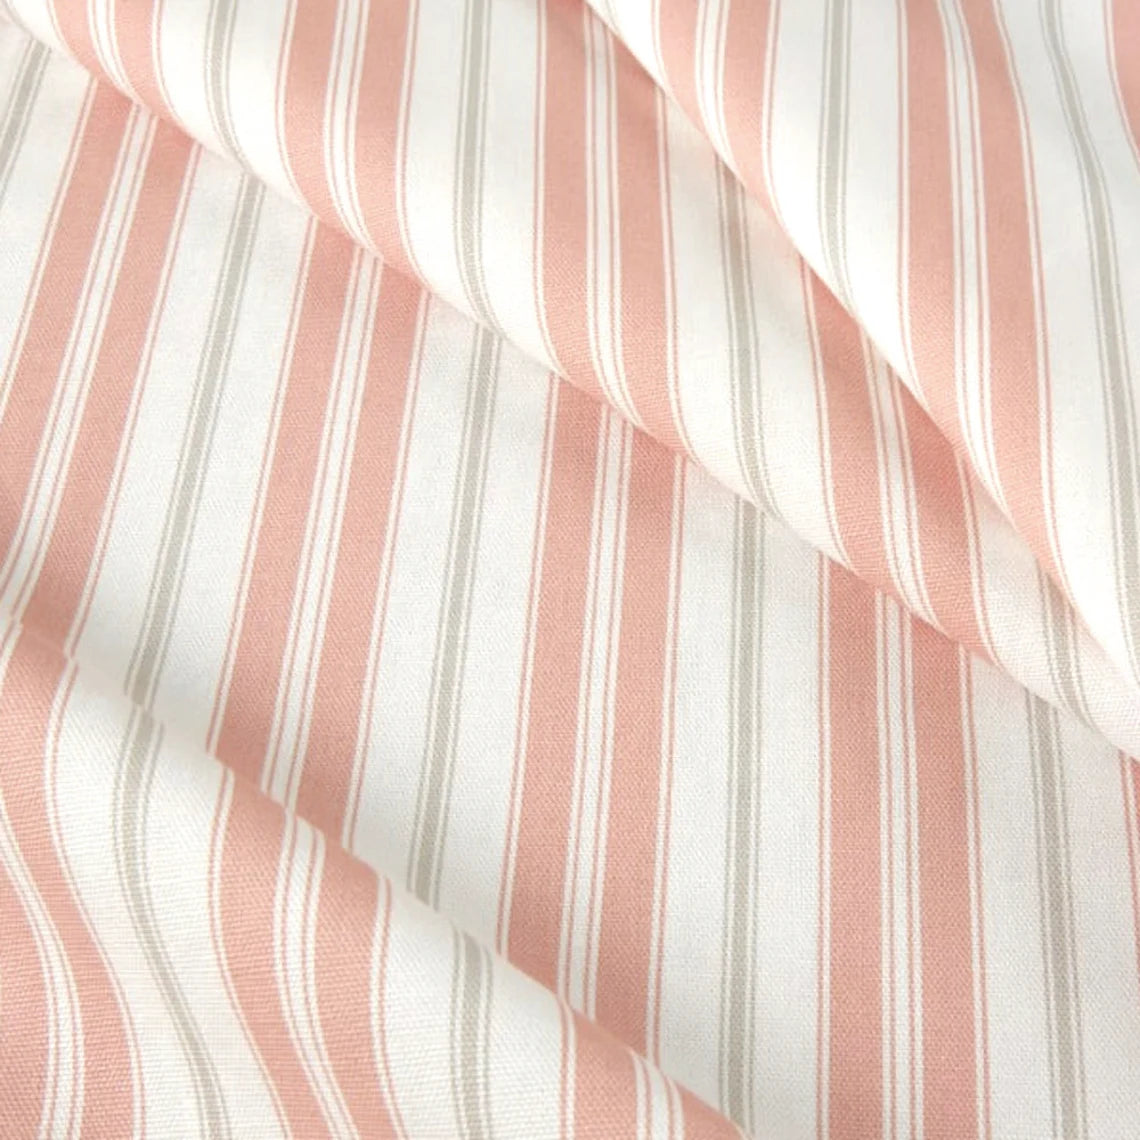 Bed Scarf in Newbury Blush Stripe- Pink, Gray, White